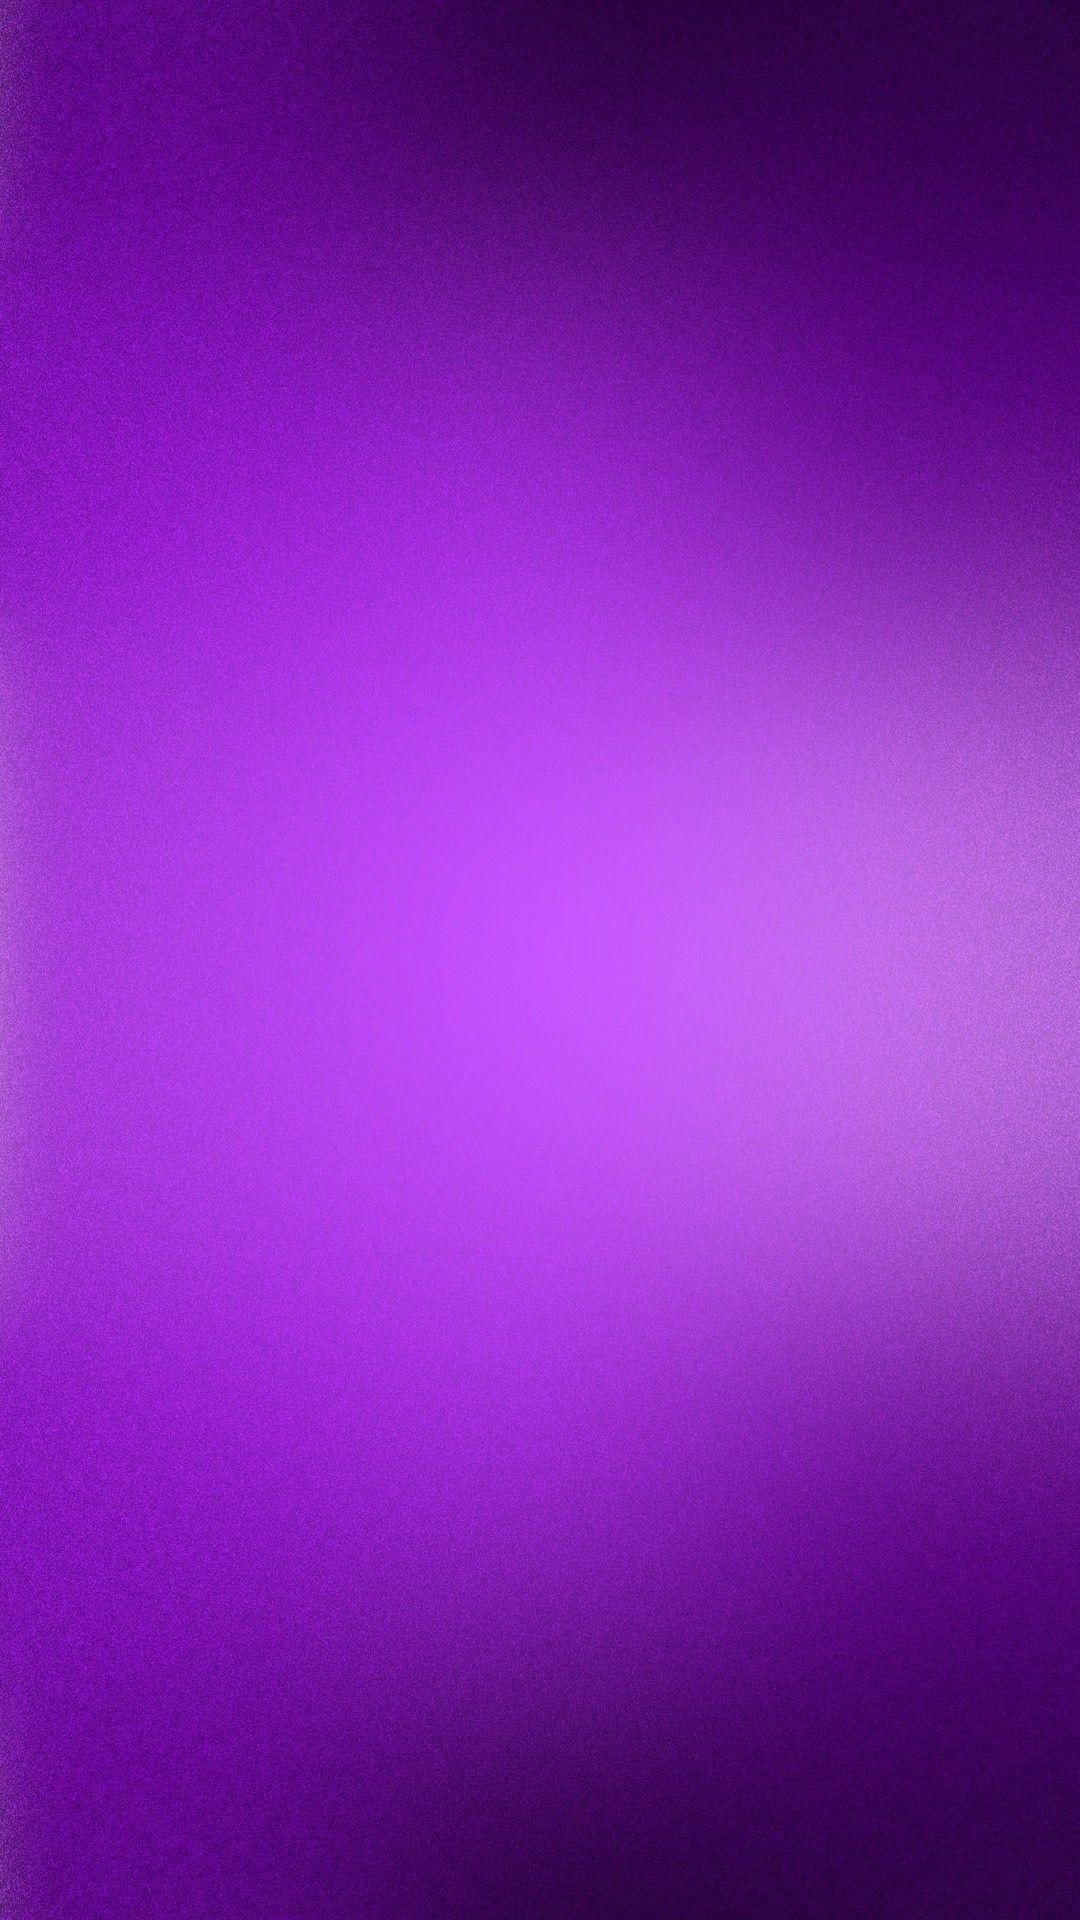 Minimalist Purple Wallpapers - Top Free Minimalist Purple Backgrounds ...